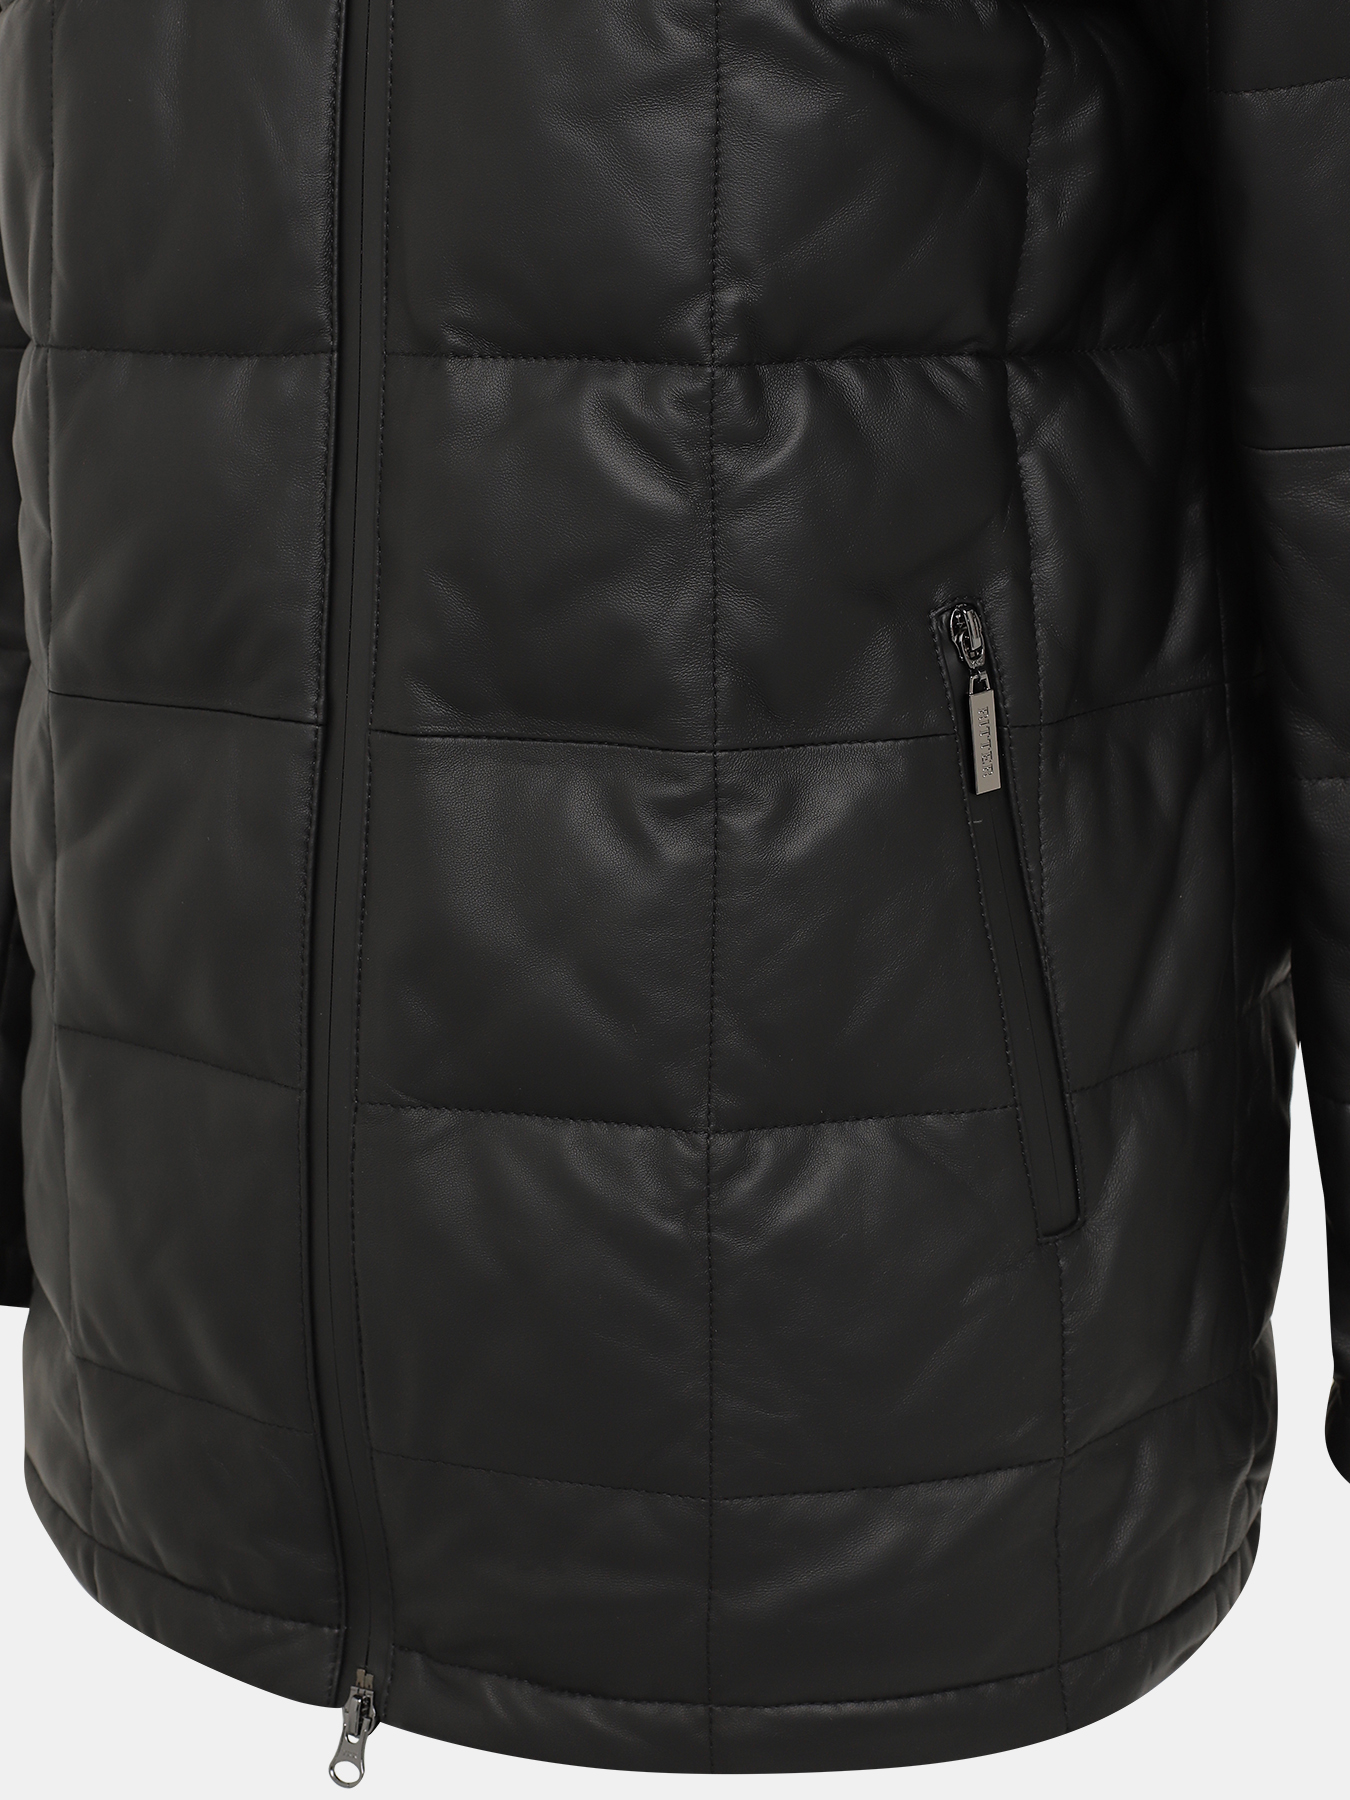 Кожаная куртка Ritter 390994-025, цвет черный, размер 48 - фото 2